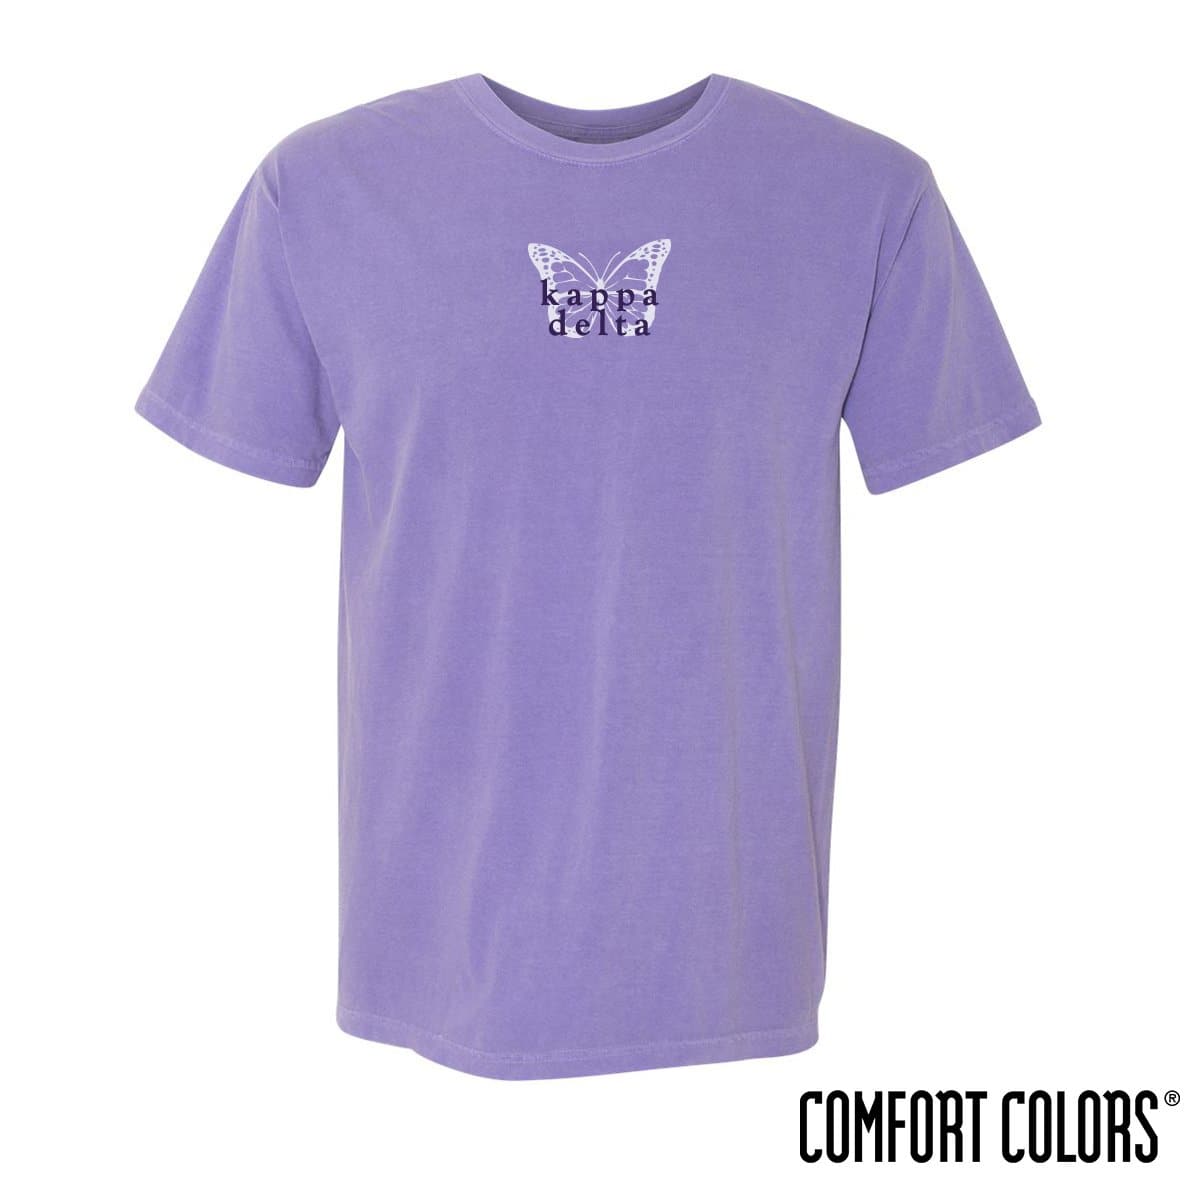 Kappa Delta Comfort Colors Purple Butterfly Tee | Kappa Delta | Shirts > Short sleeve t-shirts